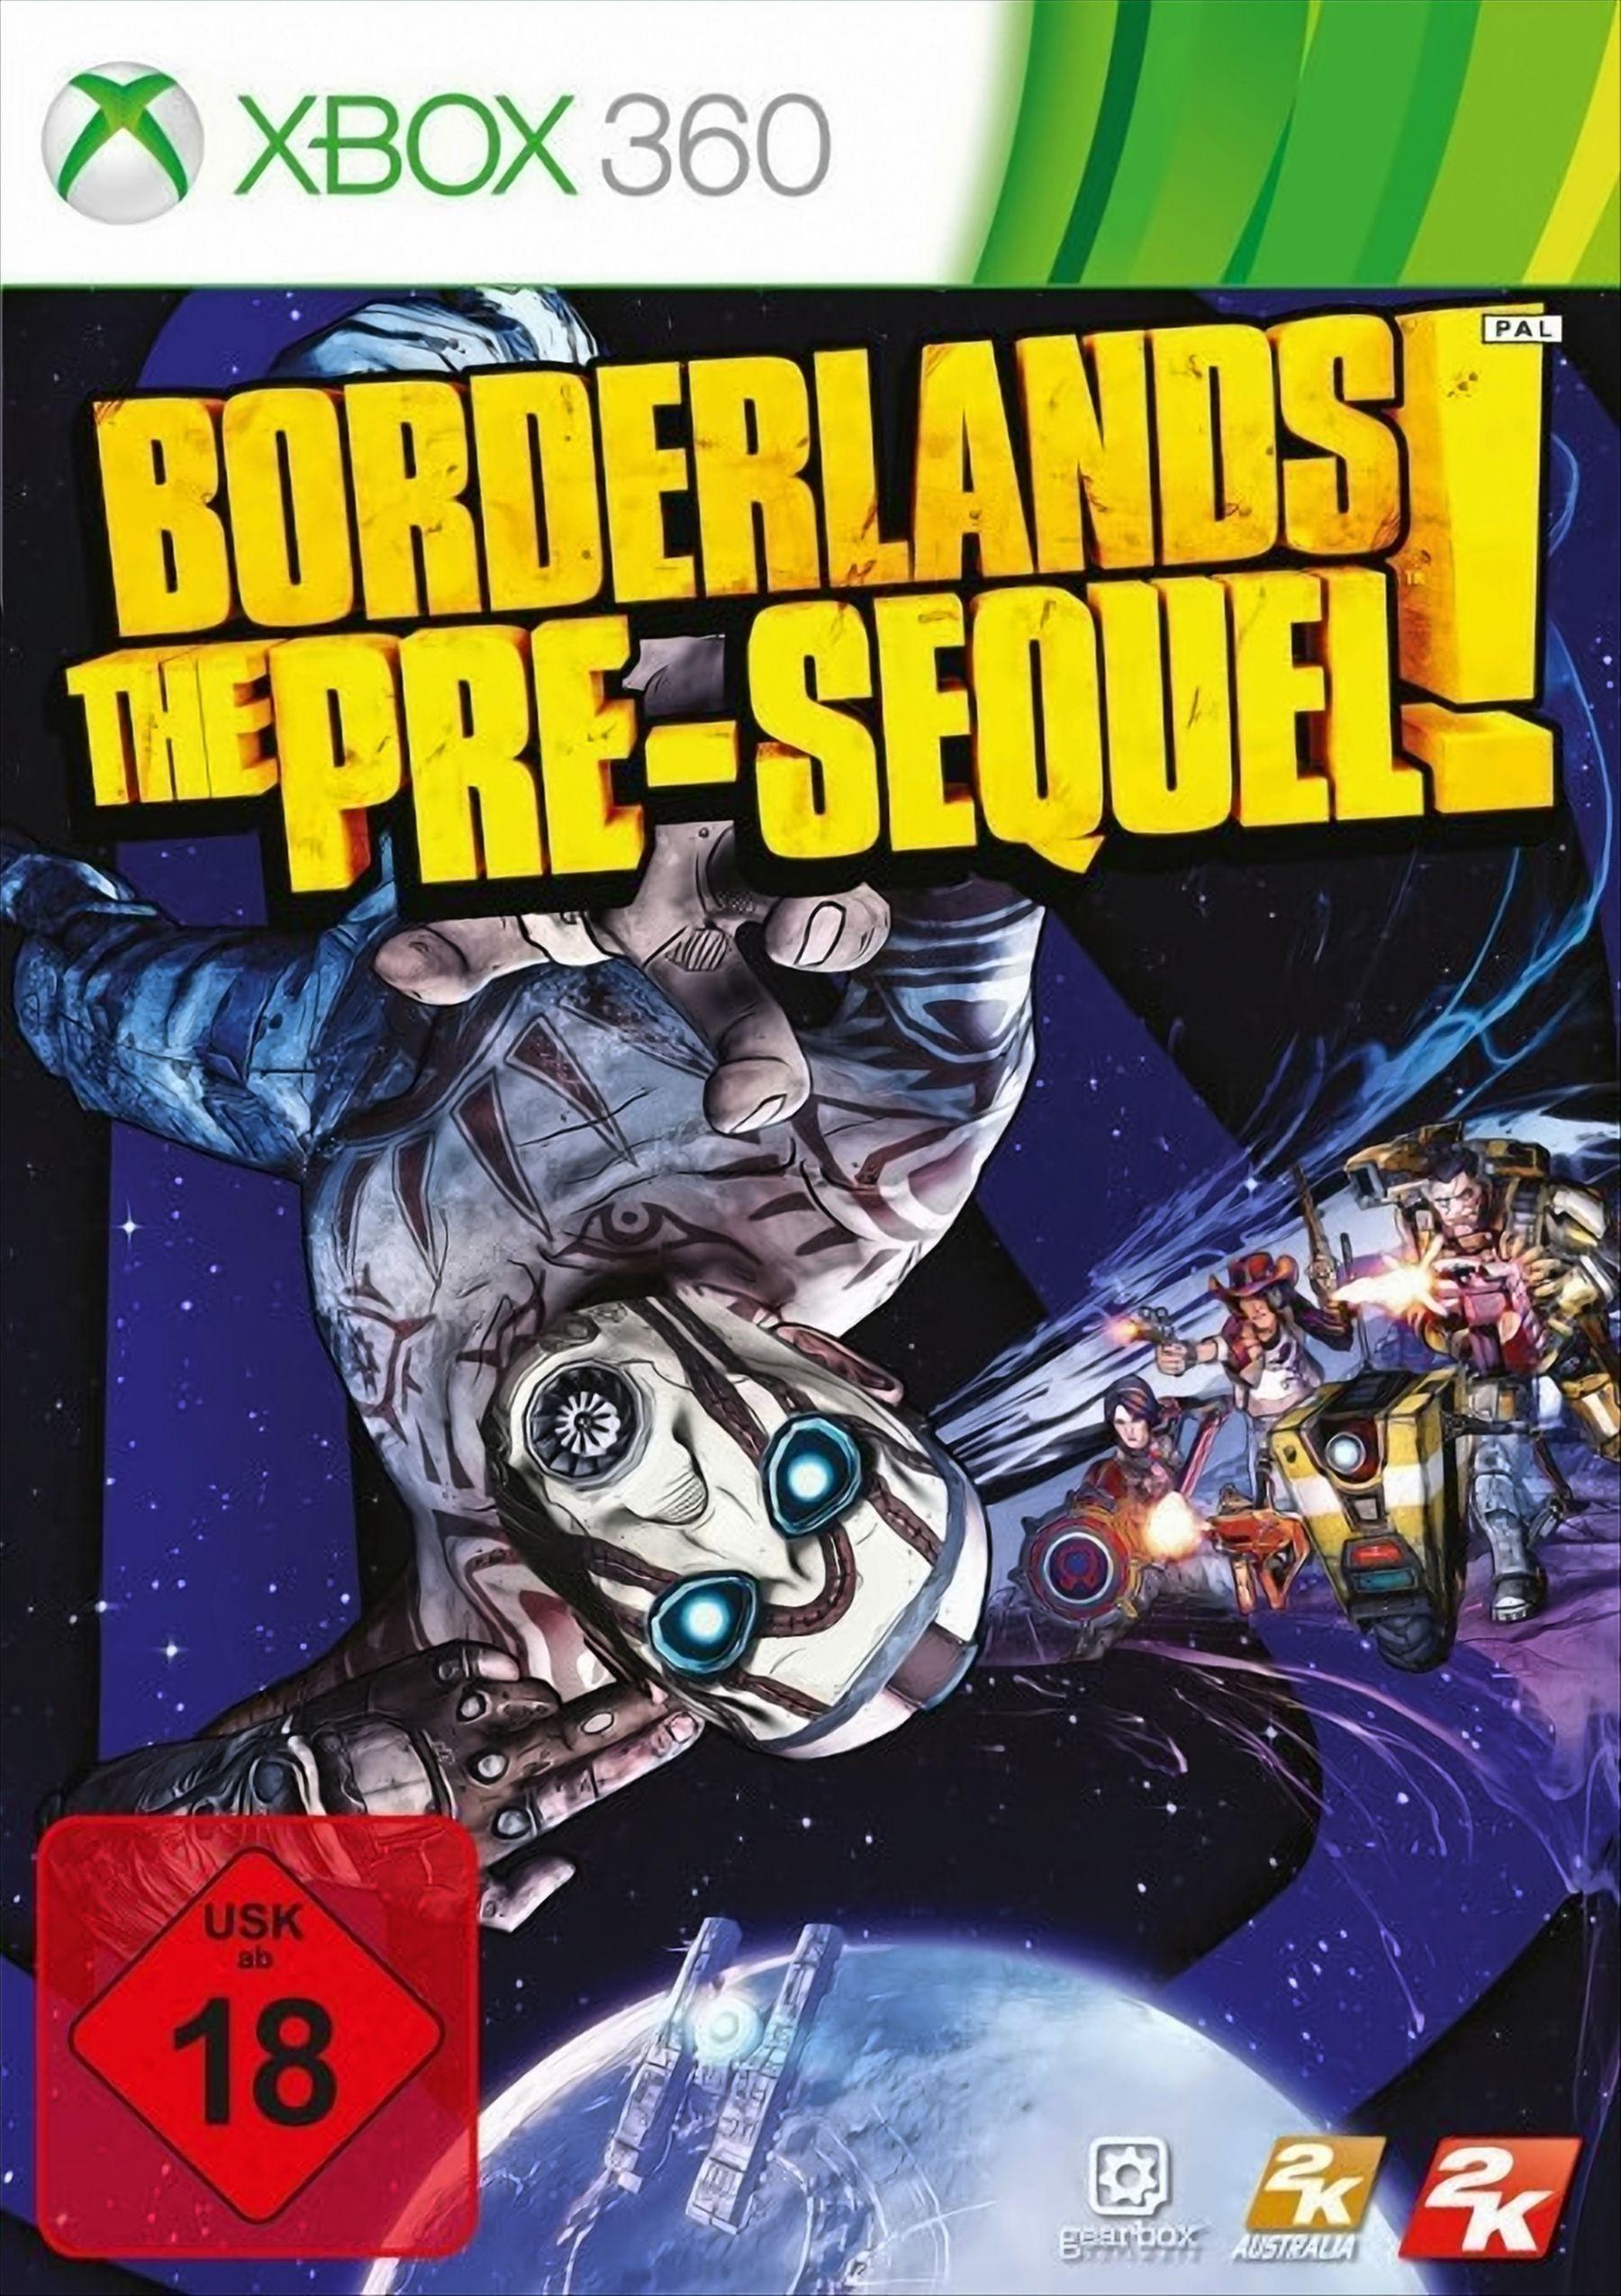 [Xbox 360] The Borderlands: - Pre-Sequel!